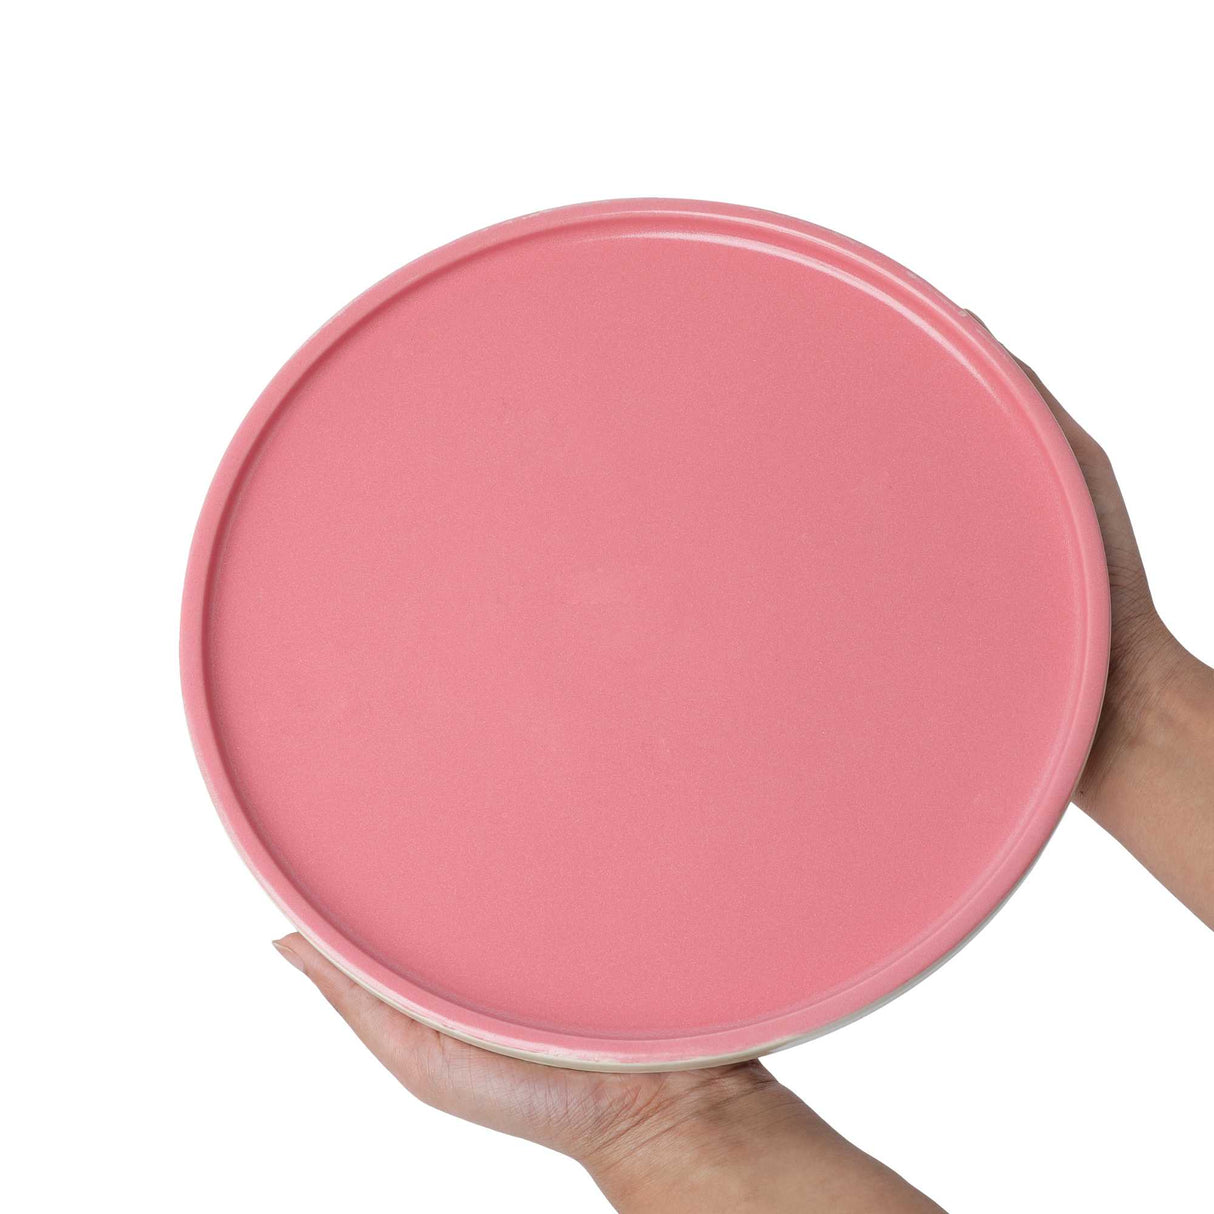 Baby pink ceramic plate